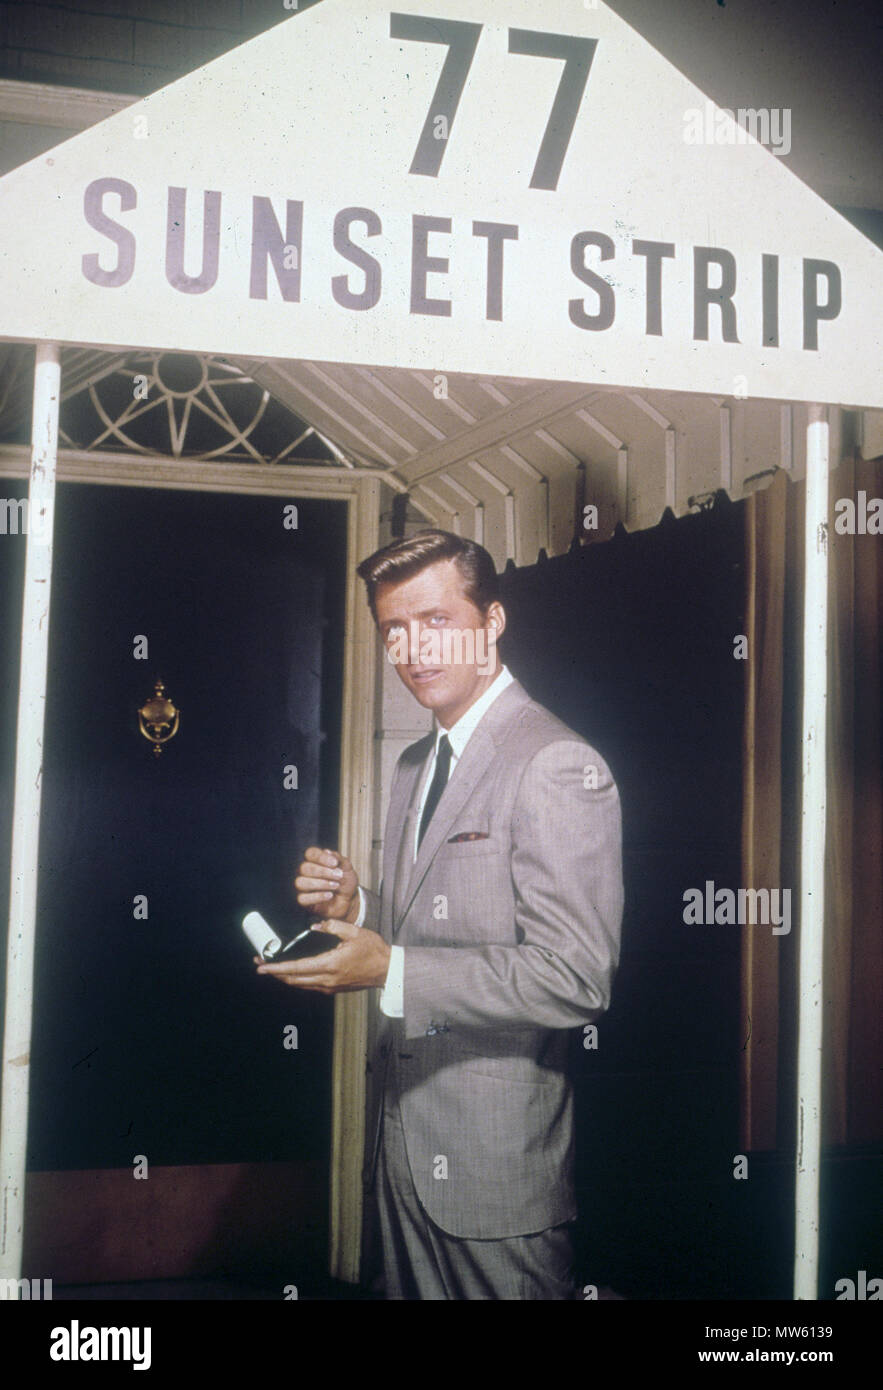 77 Sunset Strip Warner Bros TV Production 1958 a 1964 con Edd Byrnes Foto de stock